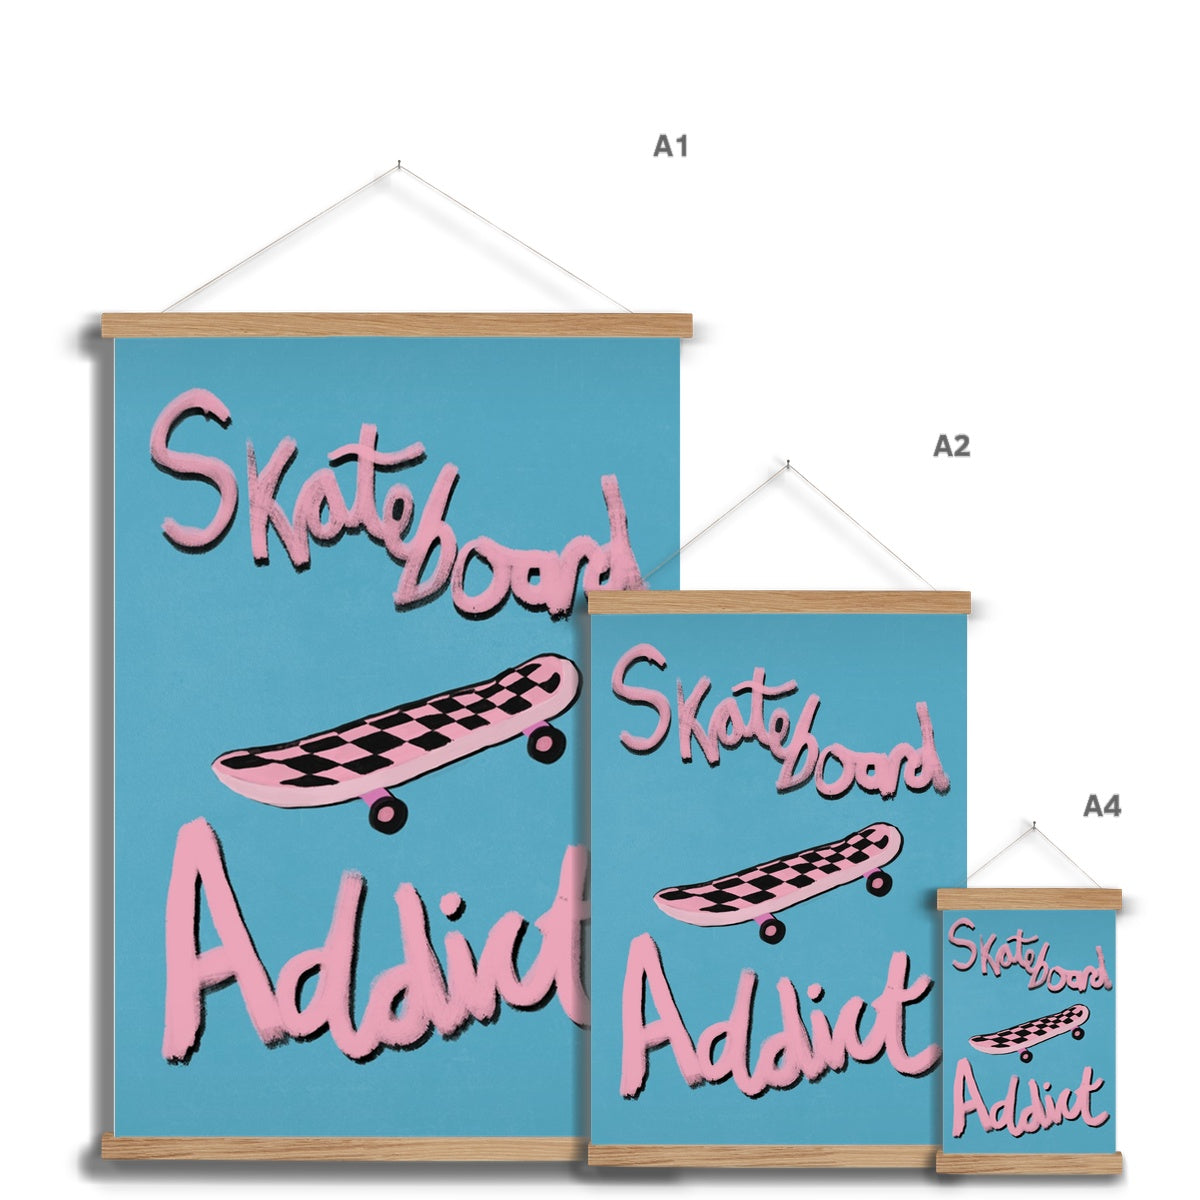 Skateboard Addict - Blue, Pink Fine Art Print with Hanger